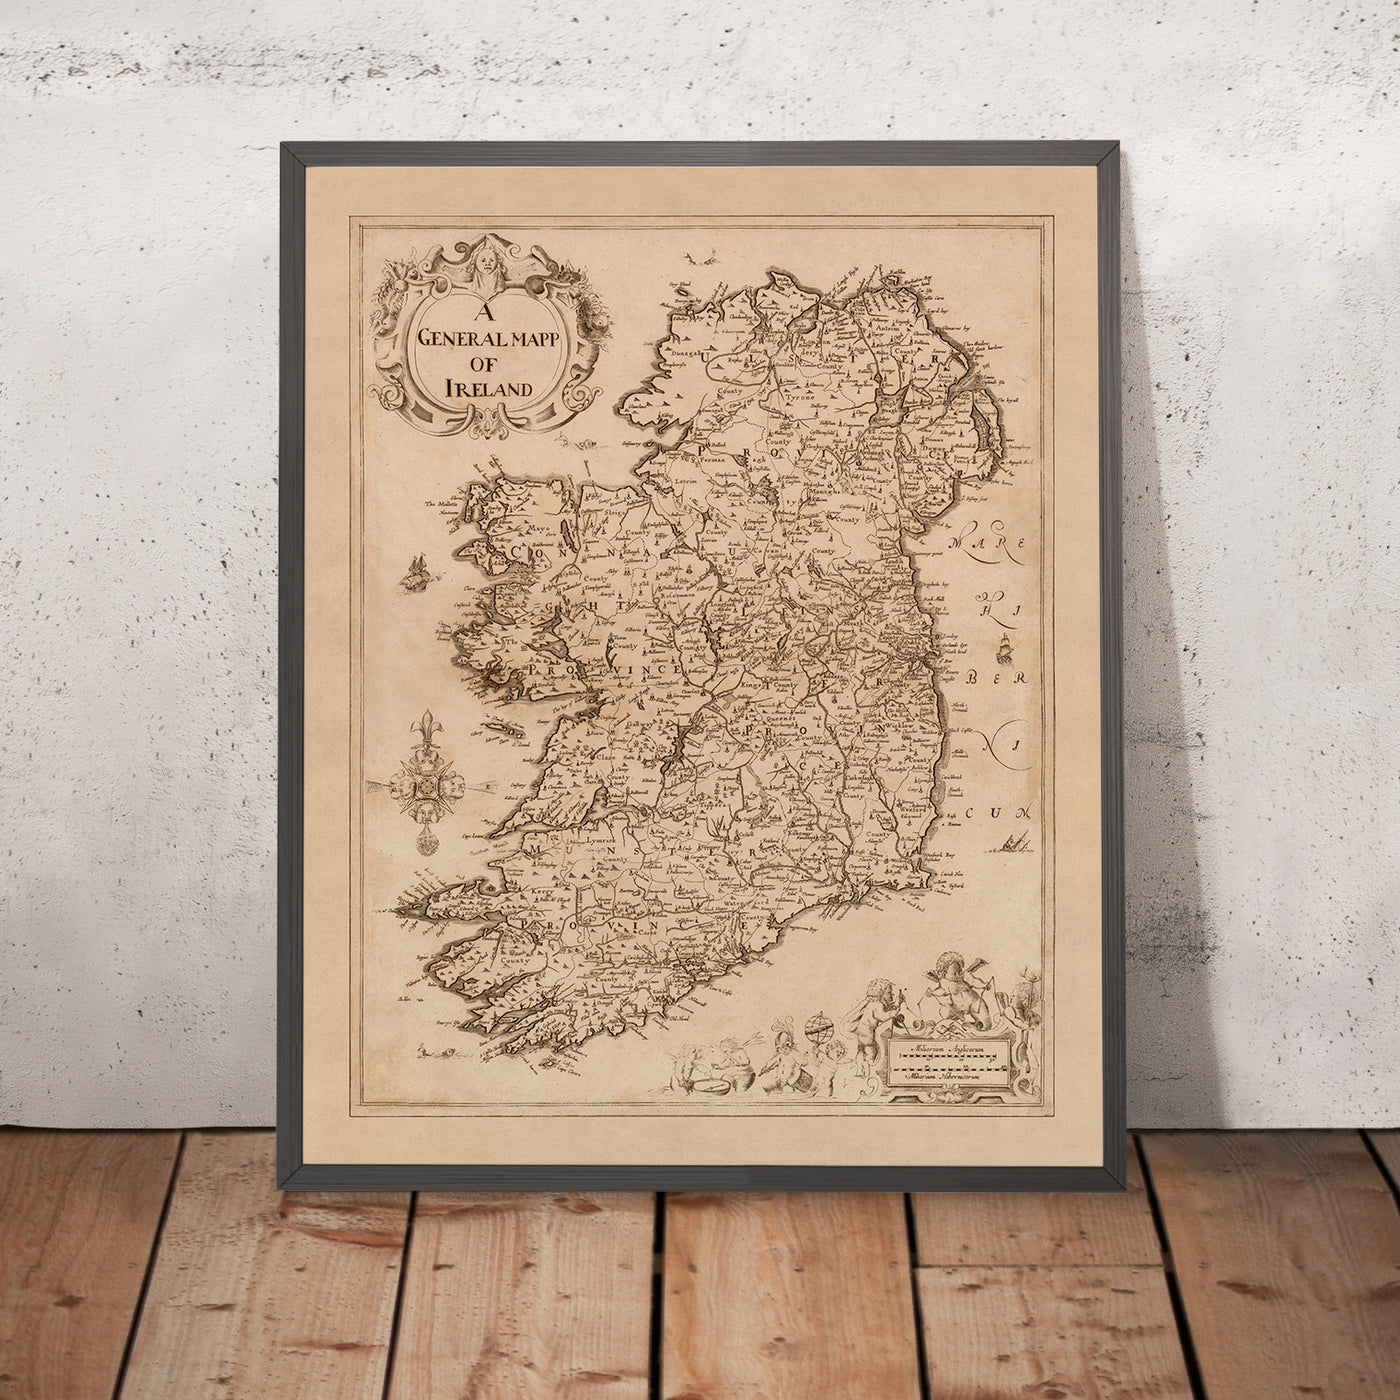 Ancienne carte de l'Irlande par Petty, 1685 : Dublin, Cork, Limerick, Galway, Waterford